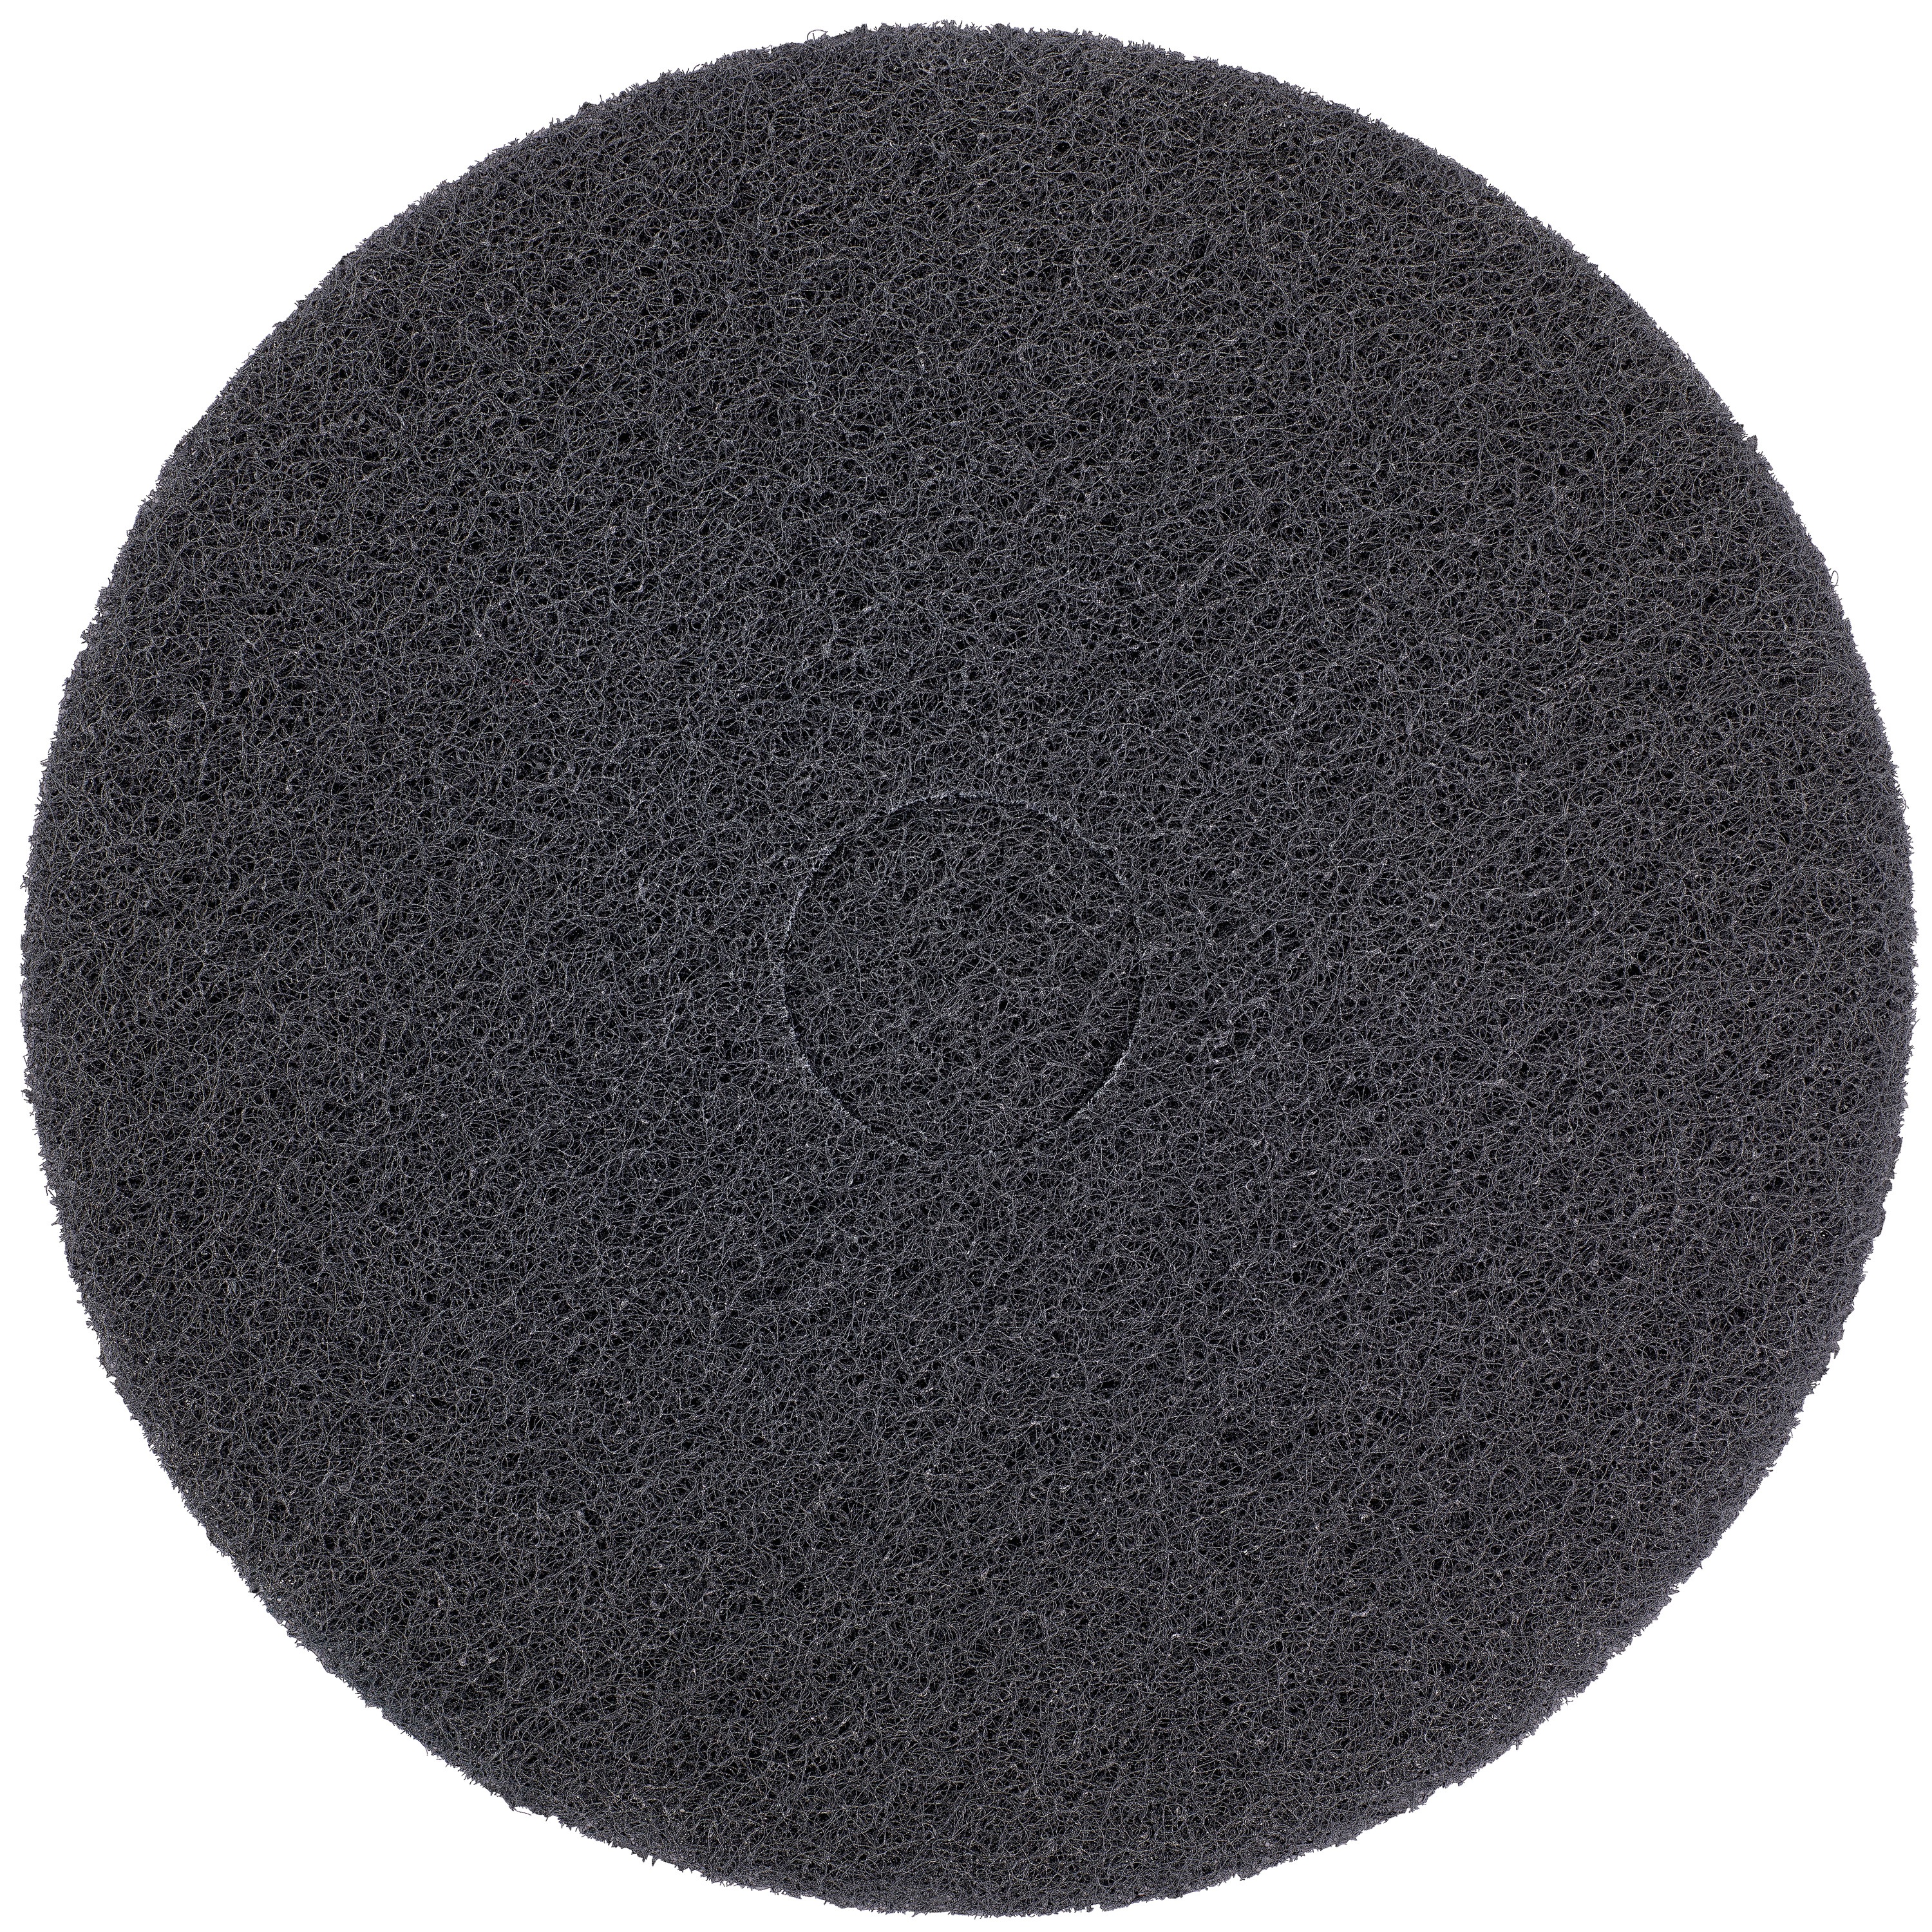 Profile of H P floor nylon pad.